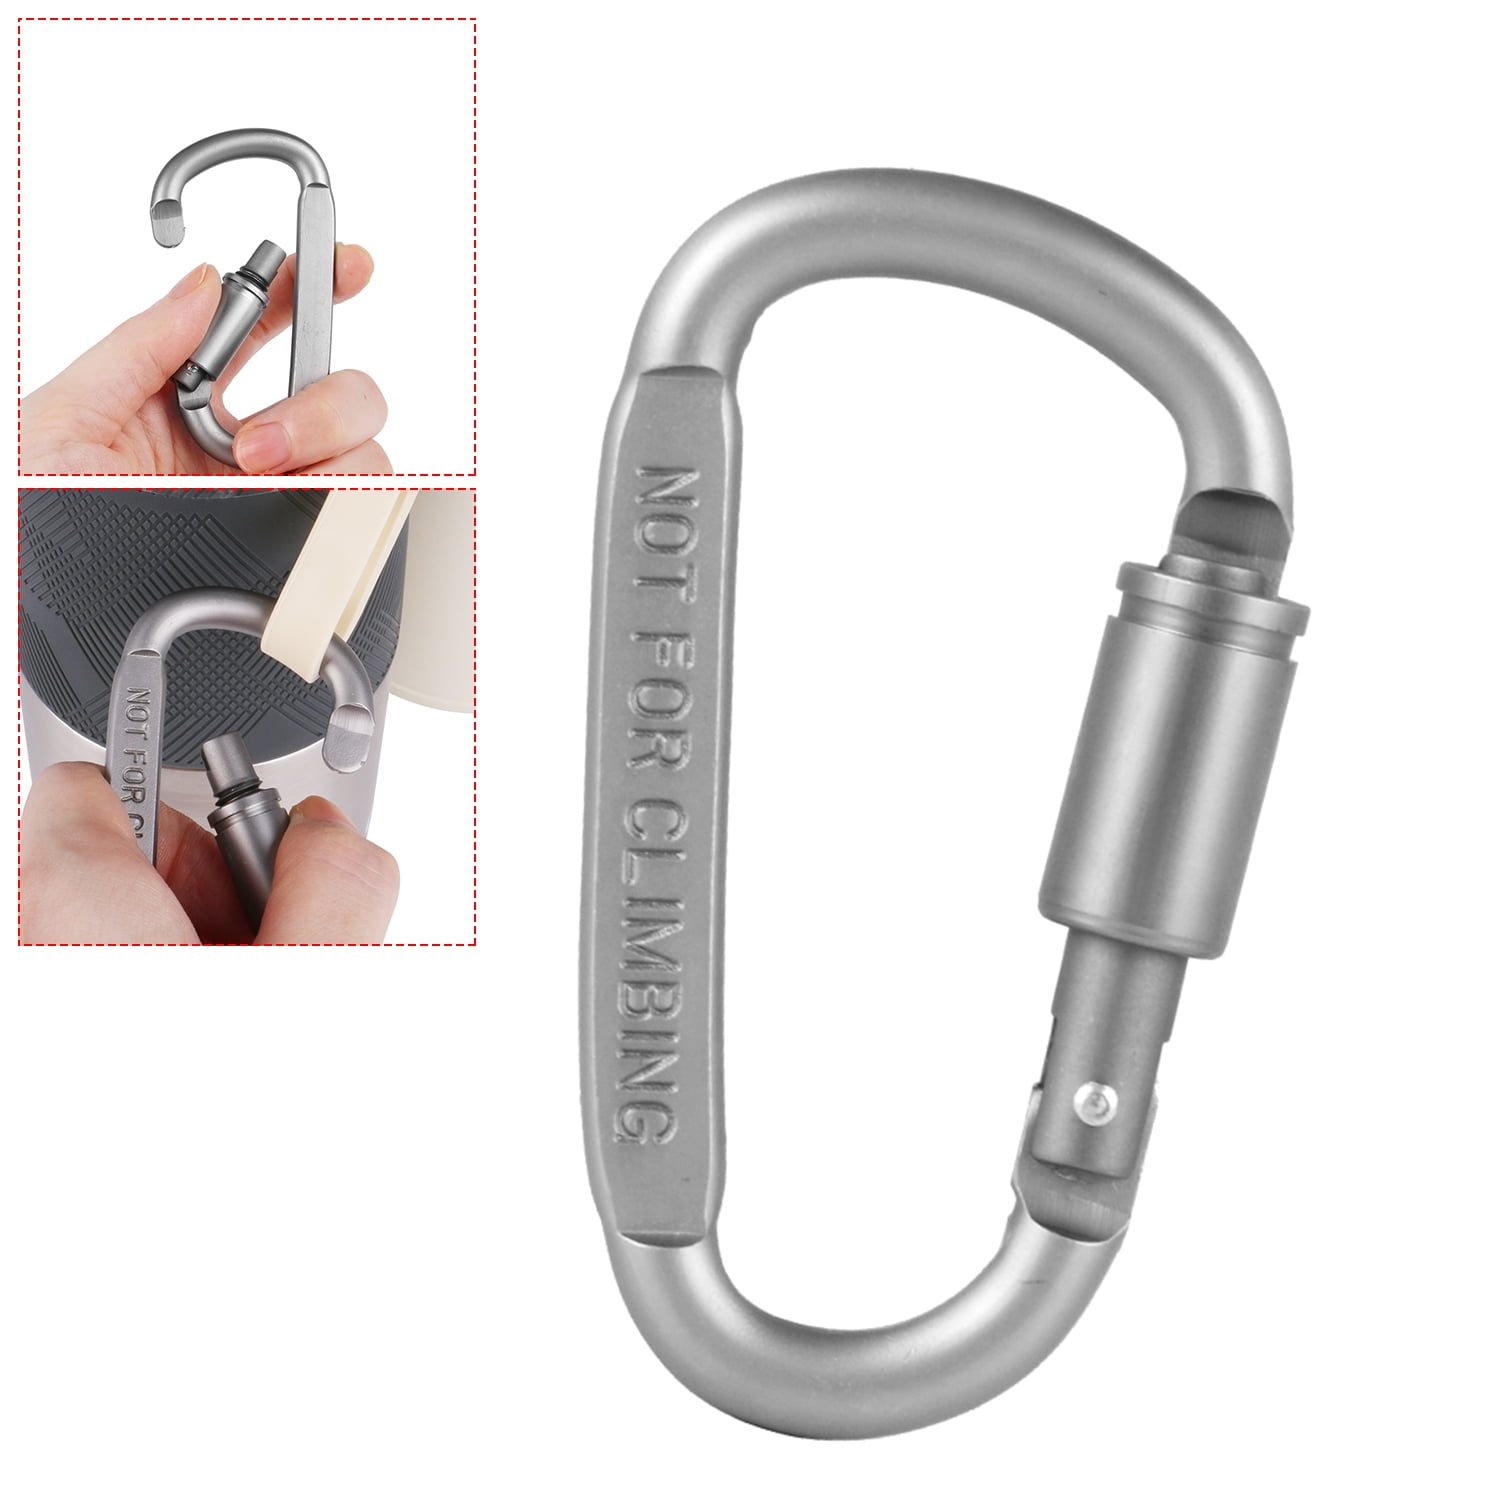 2 Aluminum Snap Hook Carabiner D Ring Combination Lock Clip Hiking Camp Luggage 